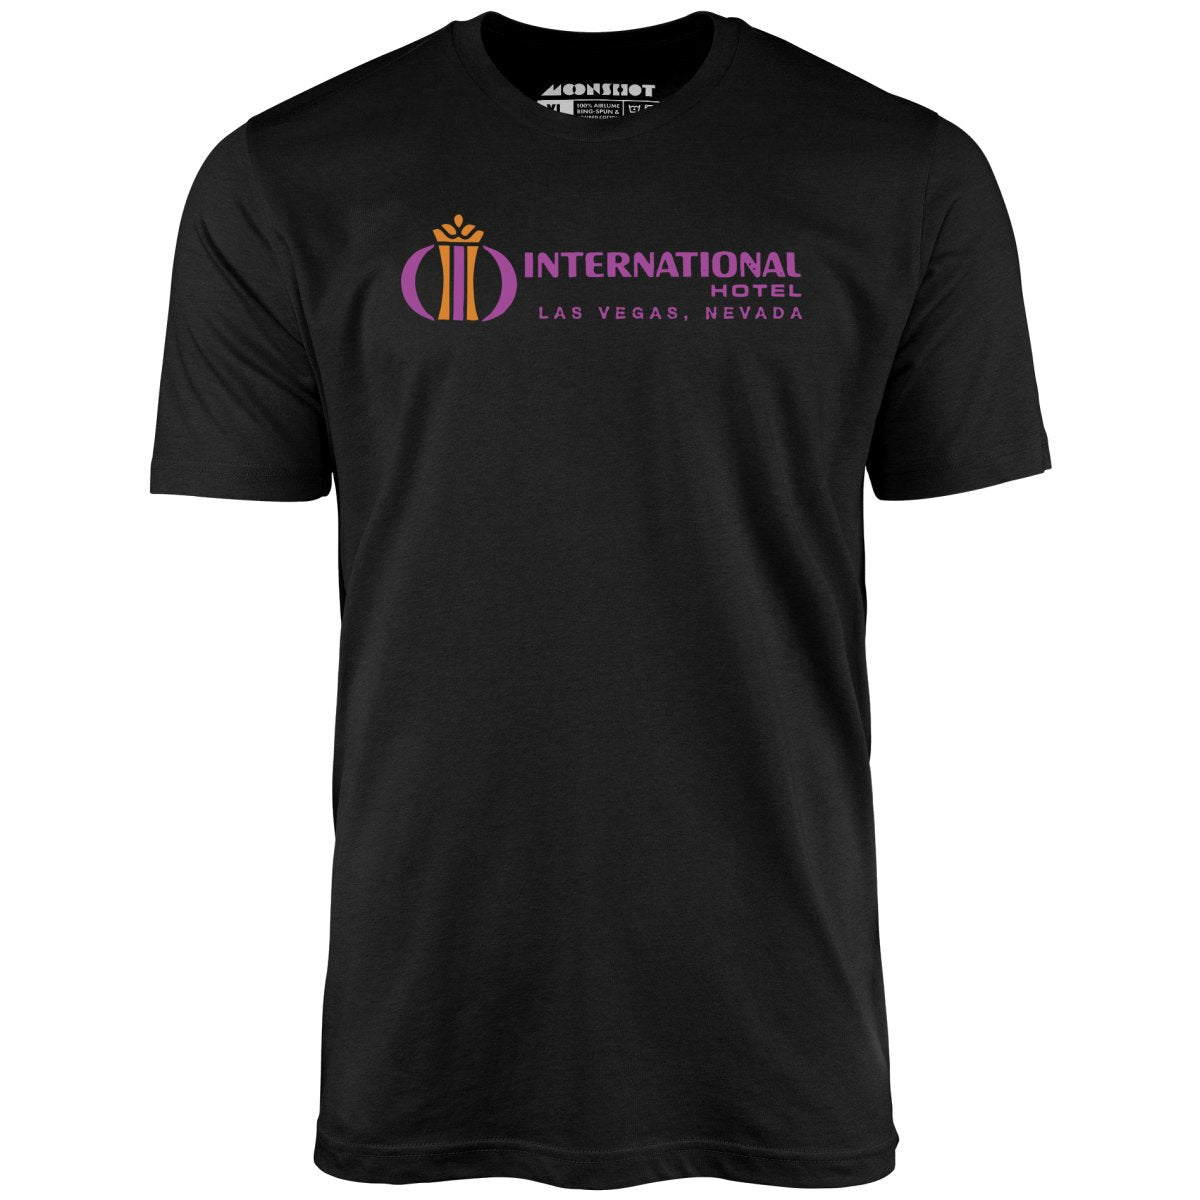 International Hotel - Vintage Las Vegas - Unisex T-Shirt